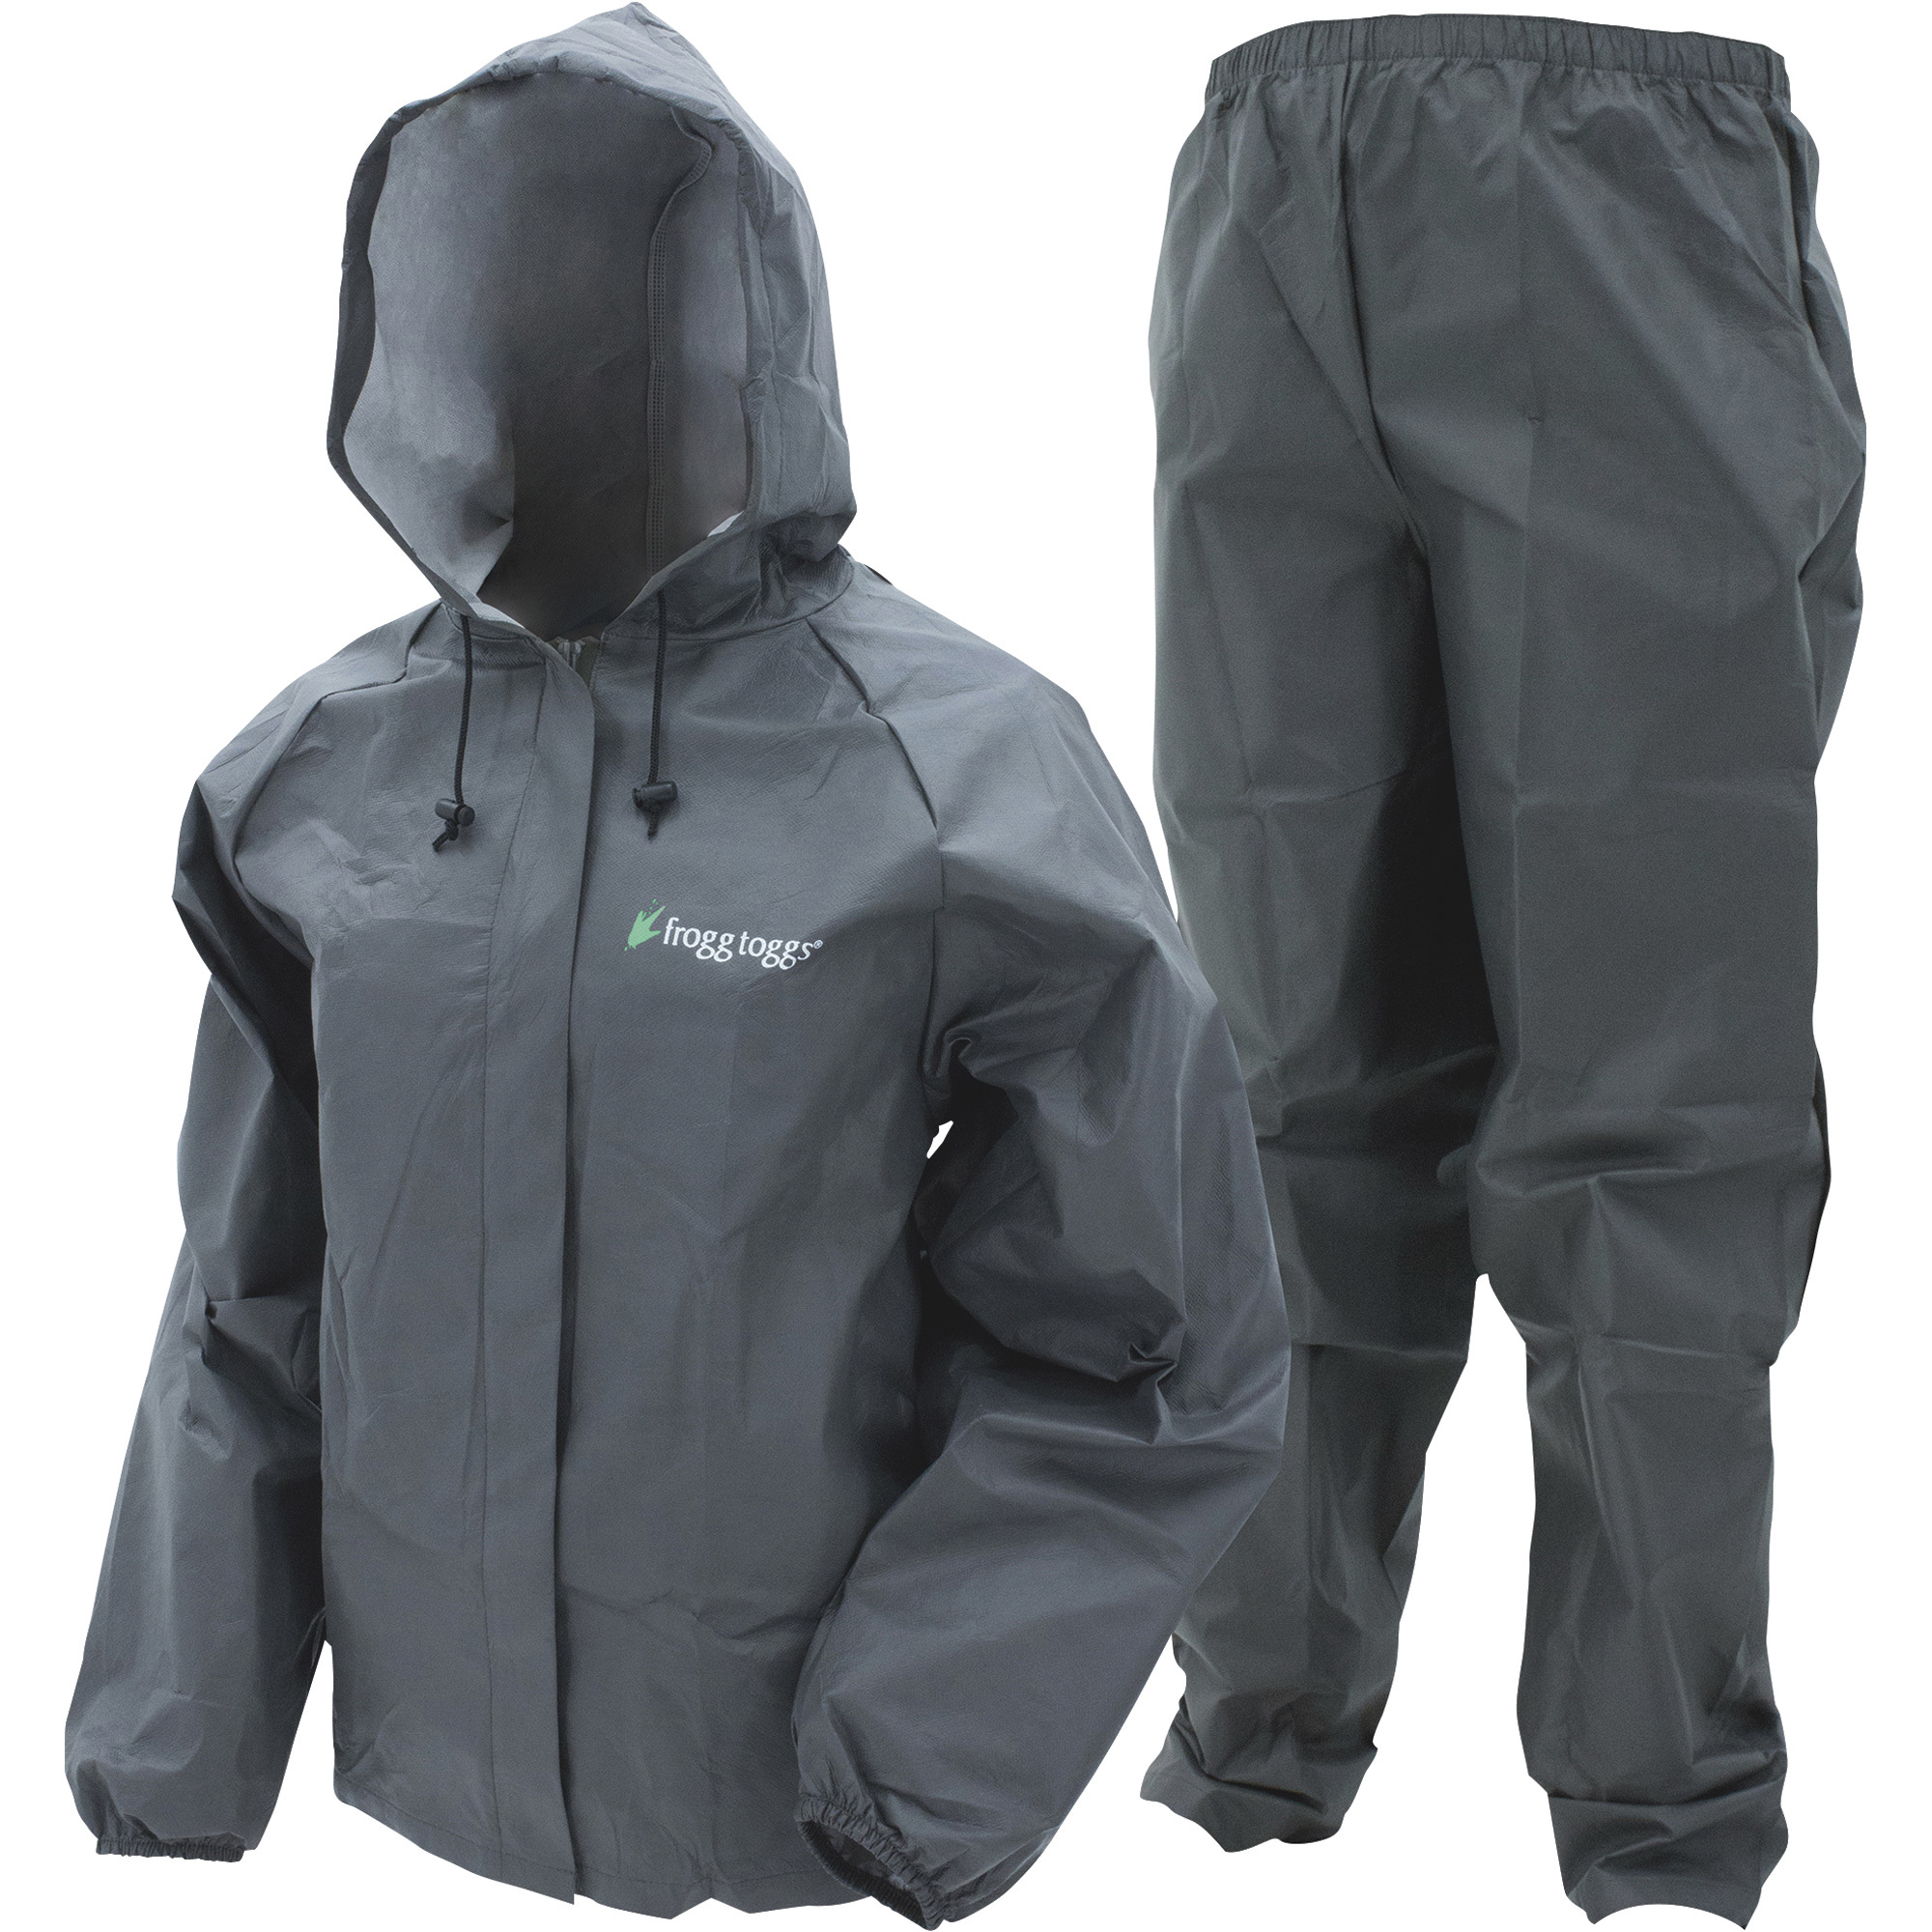 Frogg Toggs Men's Ultra-Lite 2 Jacket and Pants Rain Suit â Carbon, 2XL, Model UL12104-012X